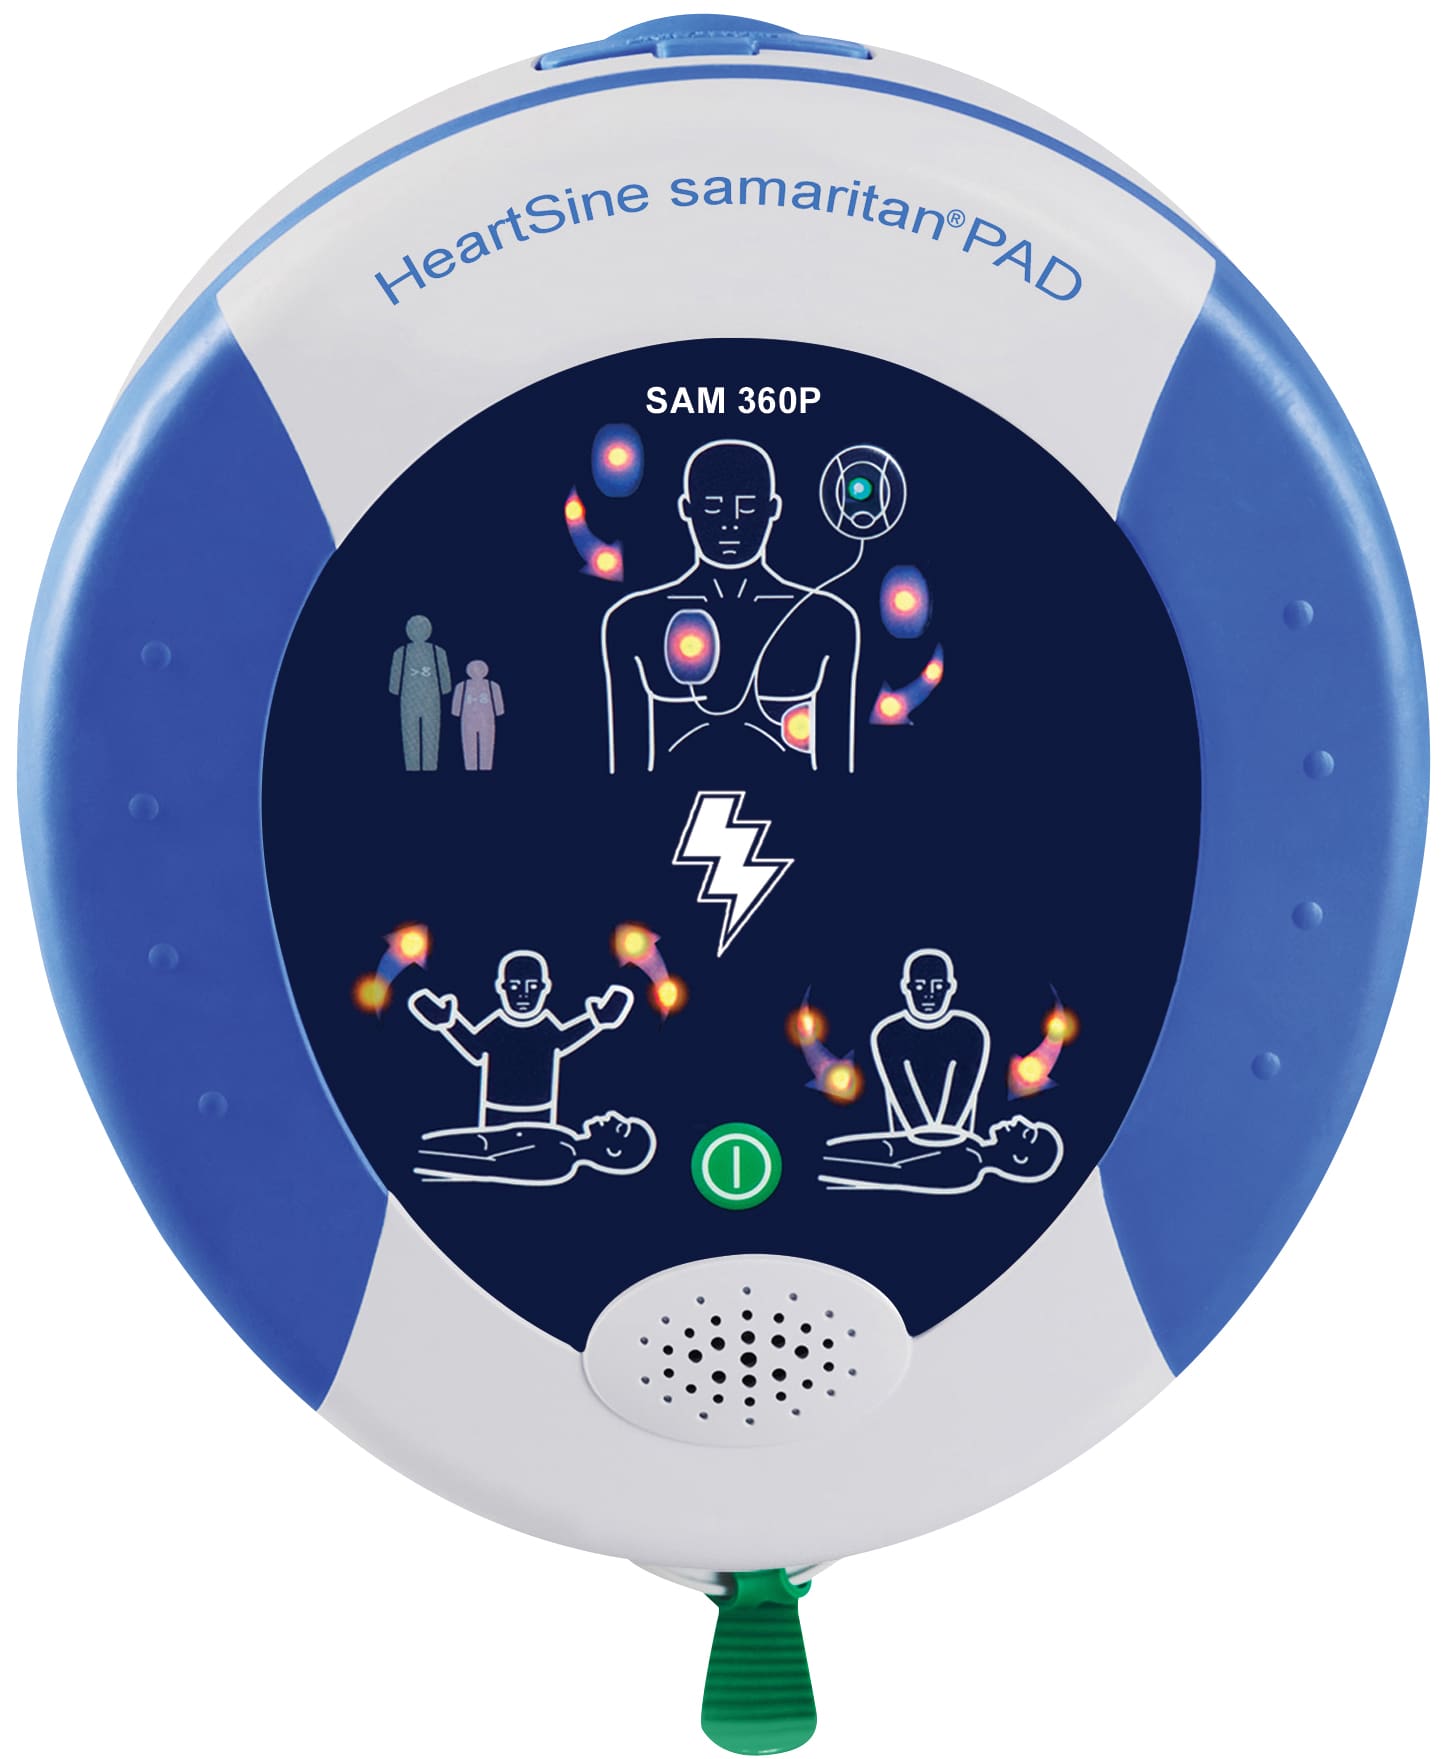 Le défibrillateur HeartSine Samaritan Pad 360P